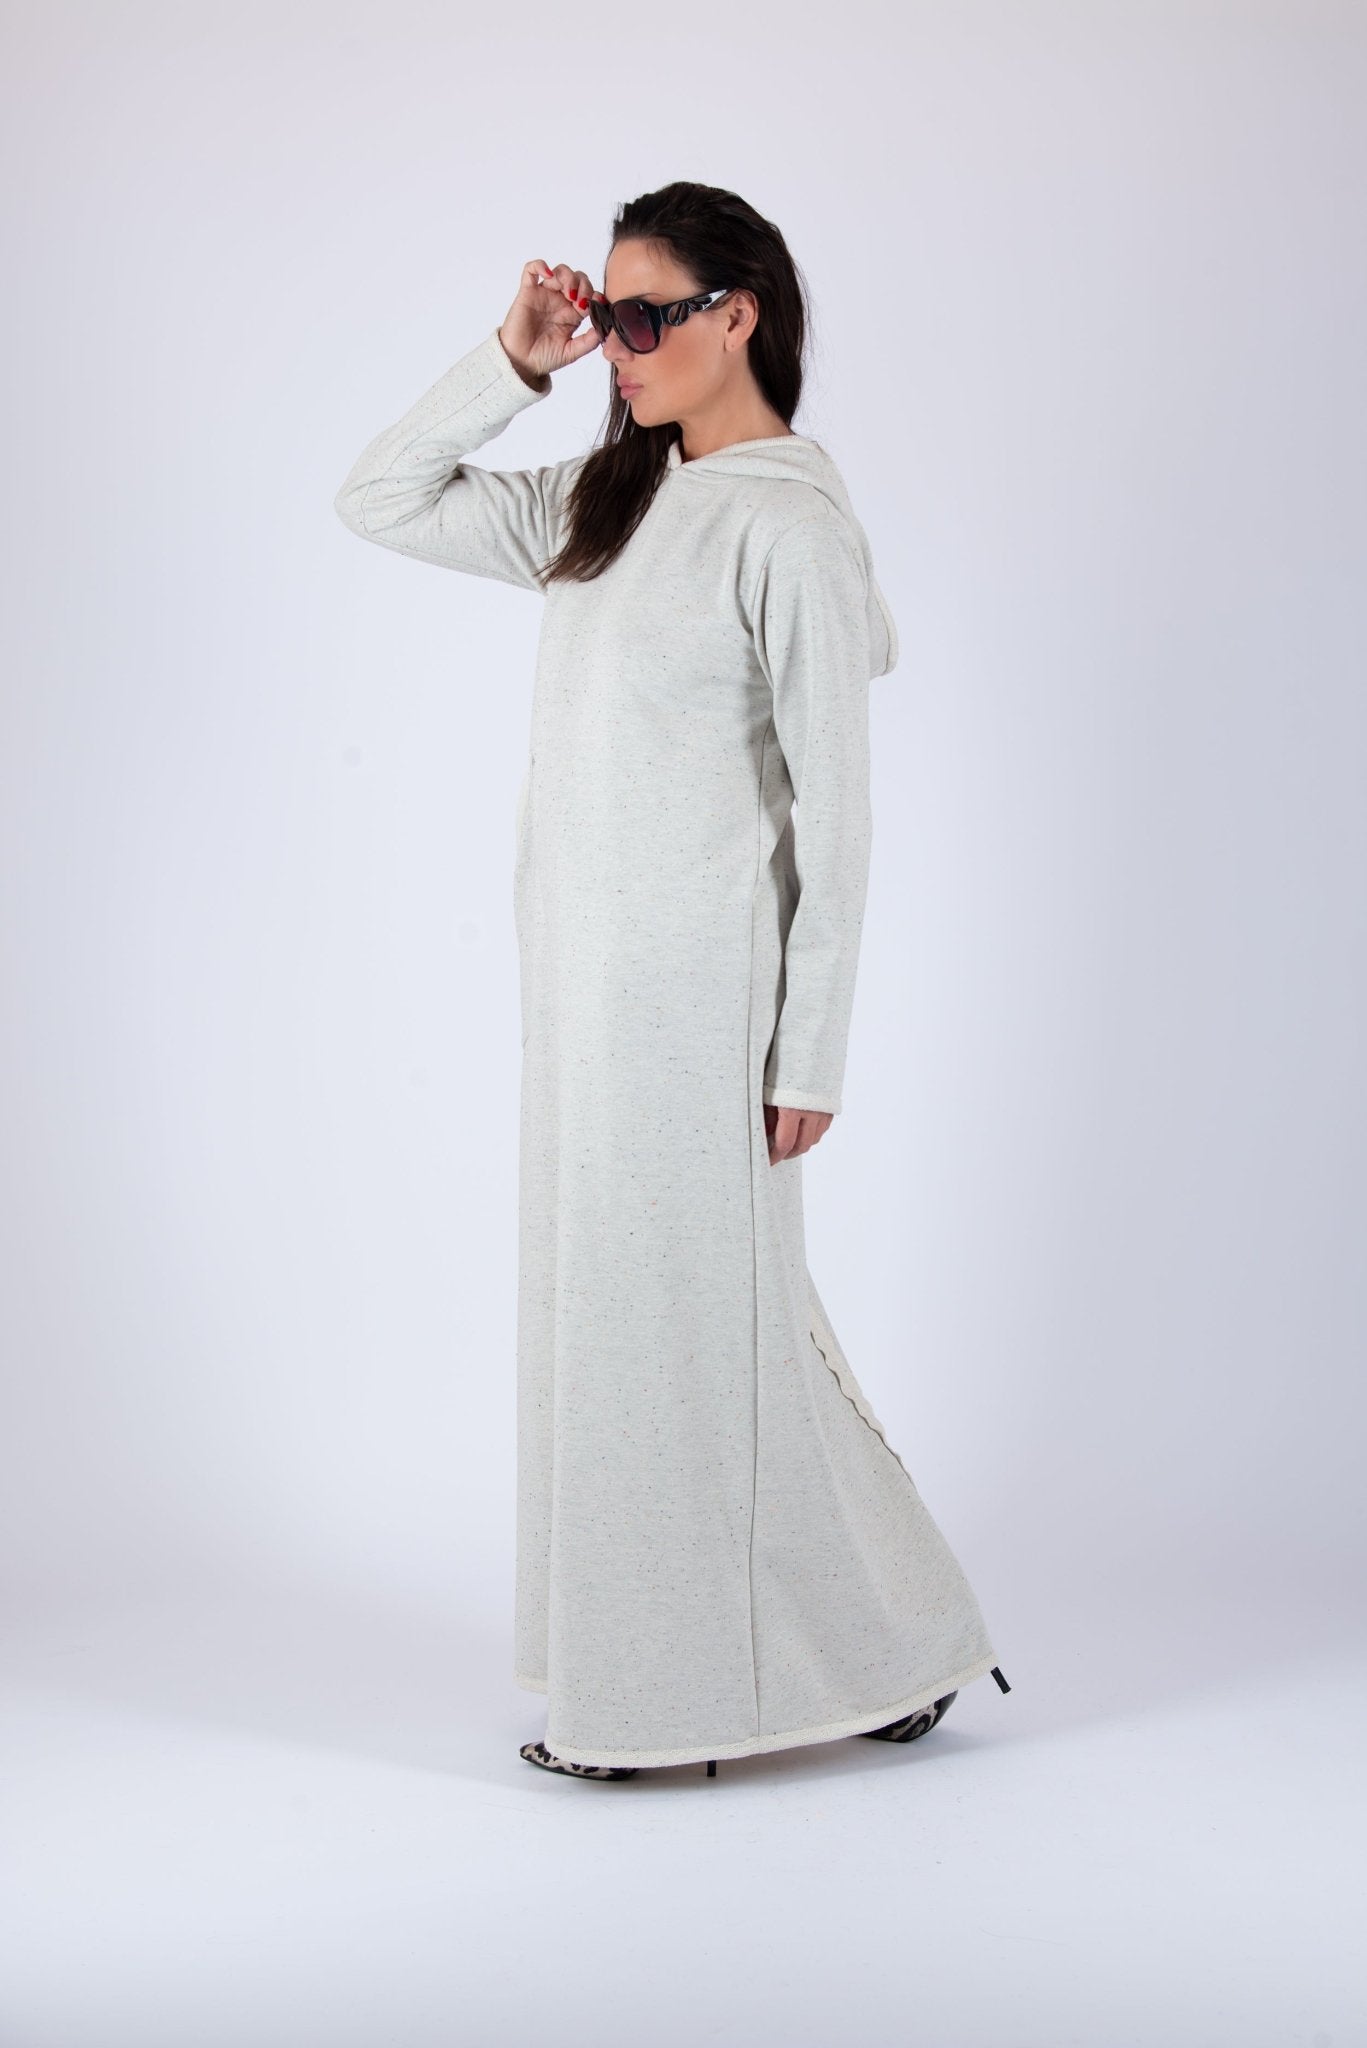 Cotton Hooded Dress EugFashion 